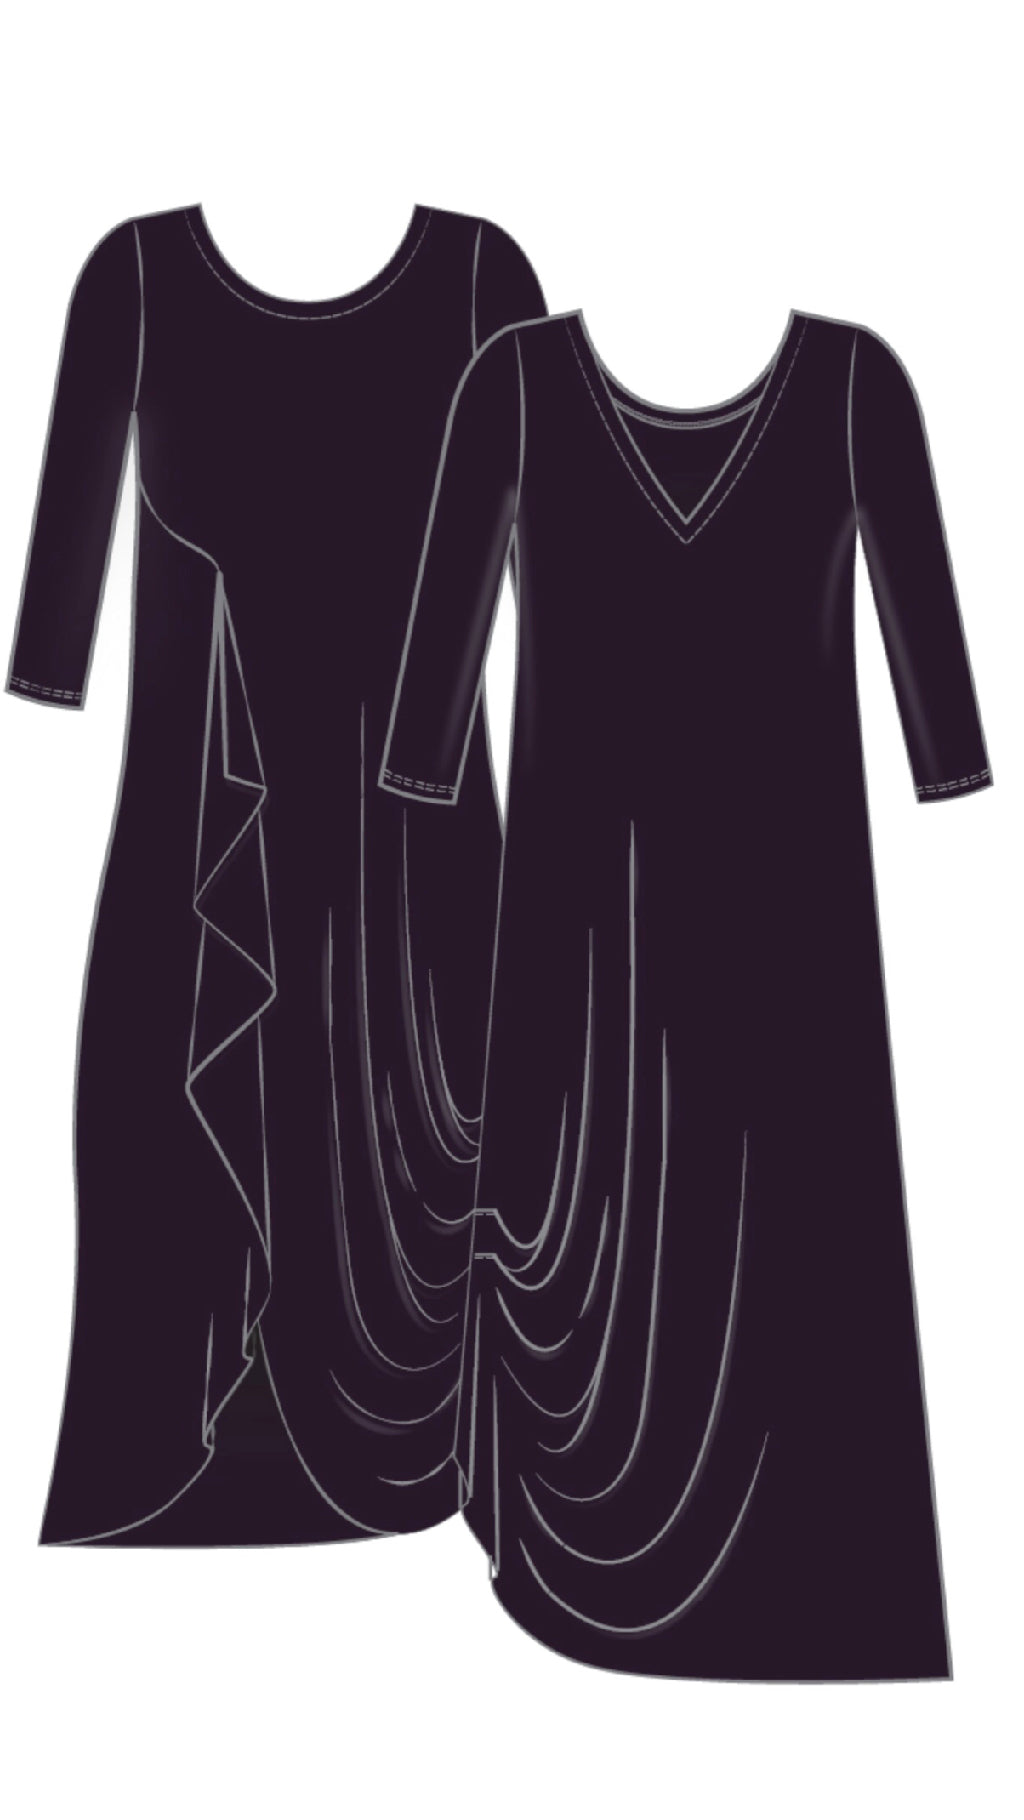 Drama Dress, 3/4 sleeve